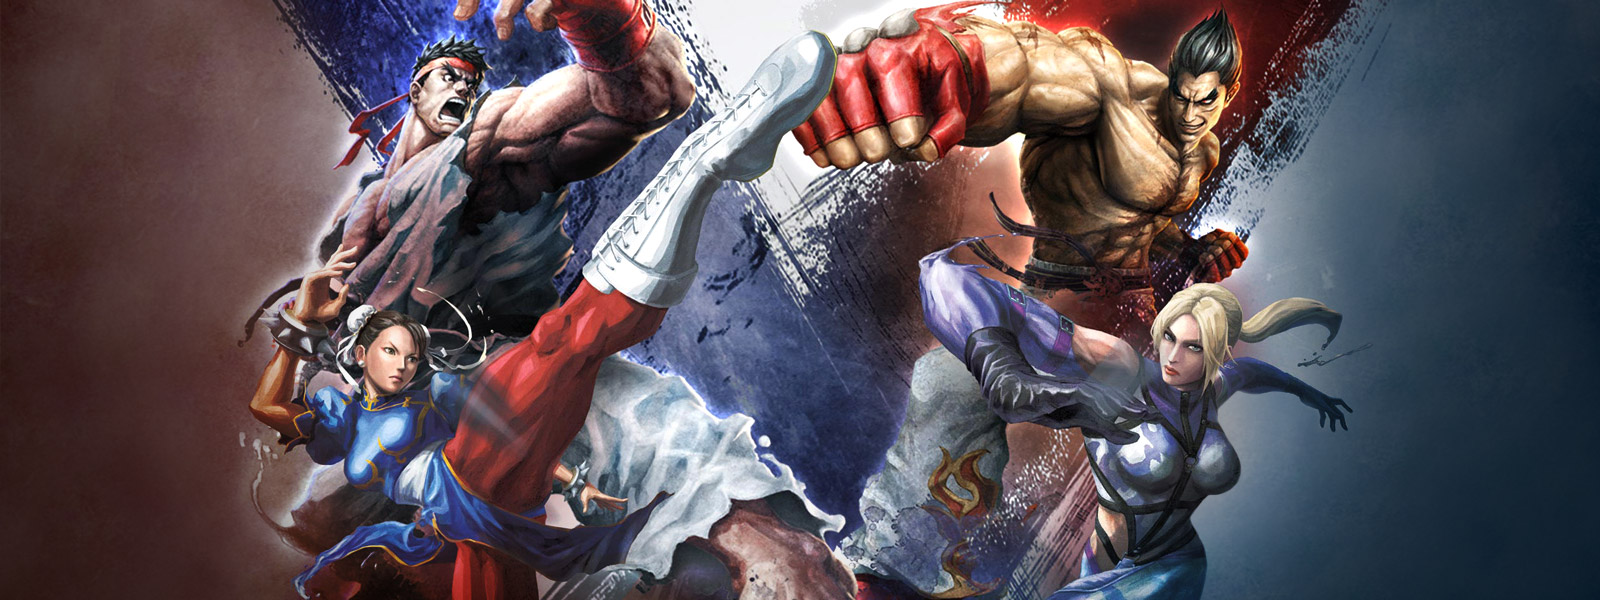 Street Fighter X Tekken - HD Wallpaper 